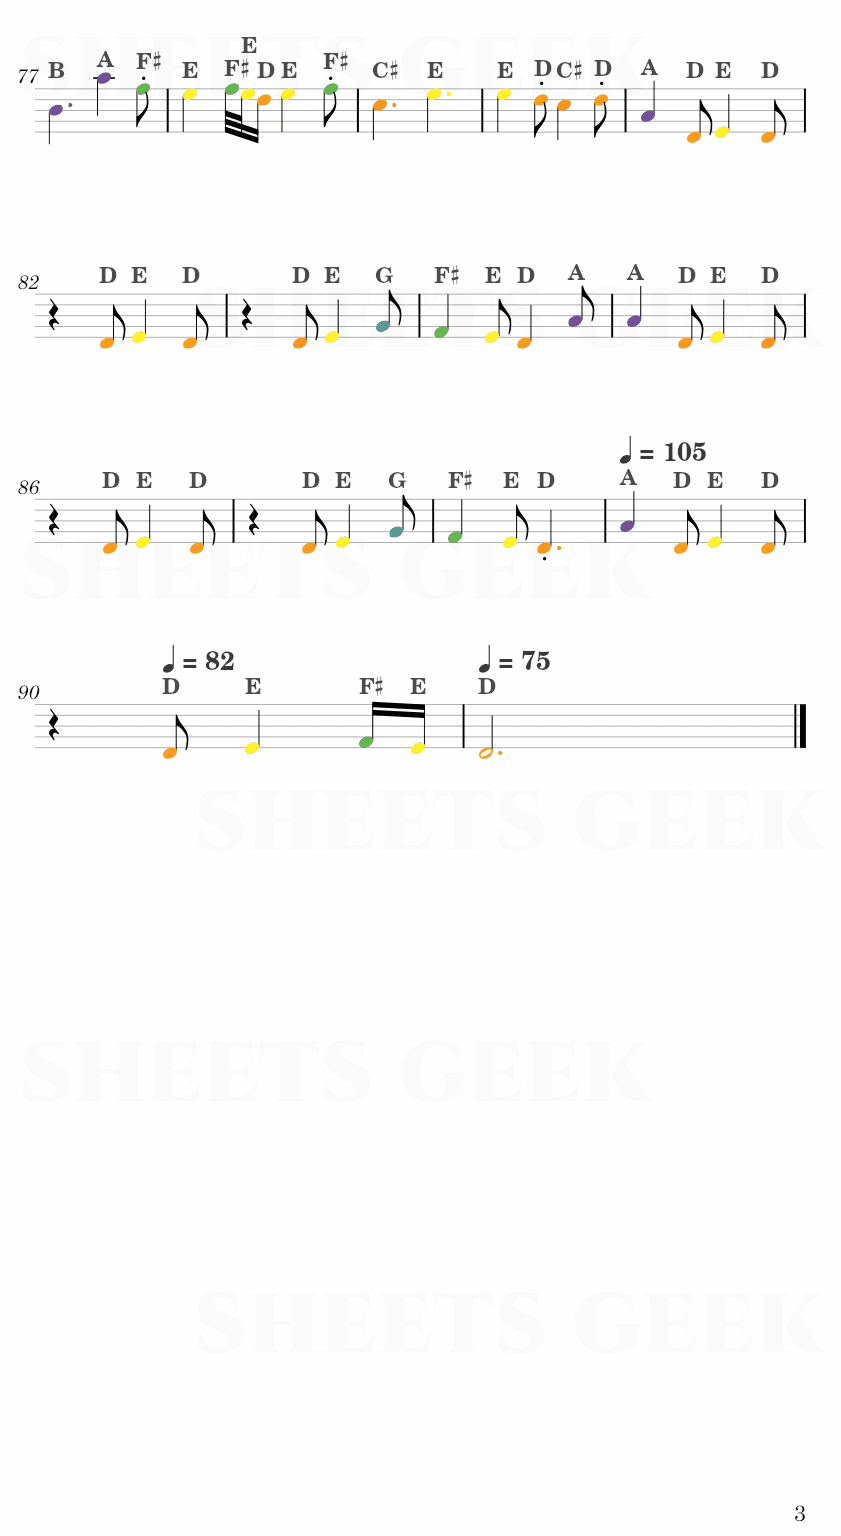 Fallen Down (Reprise) - Undertale Easy Sheets Music Free for piano, keyboard, flute, violin, sax, celllo 3